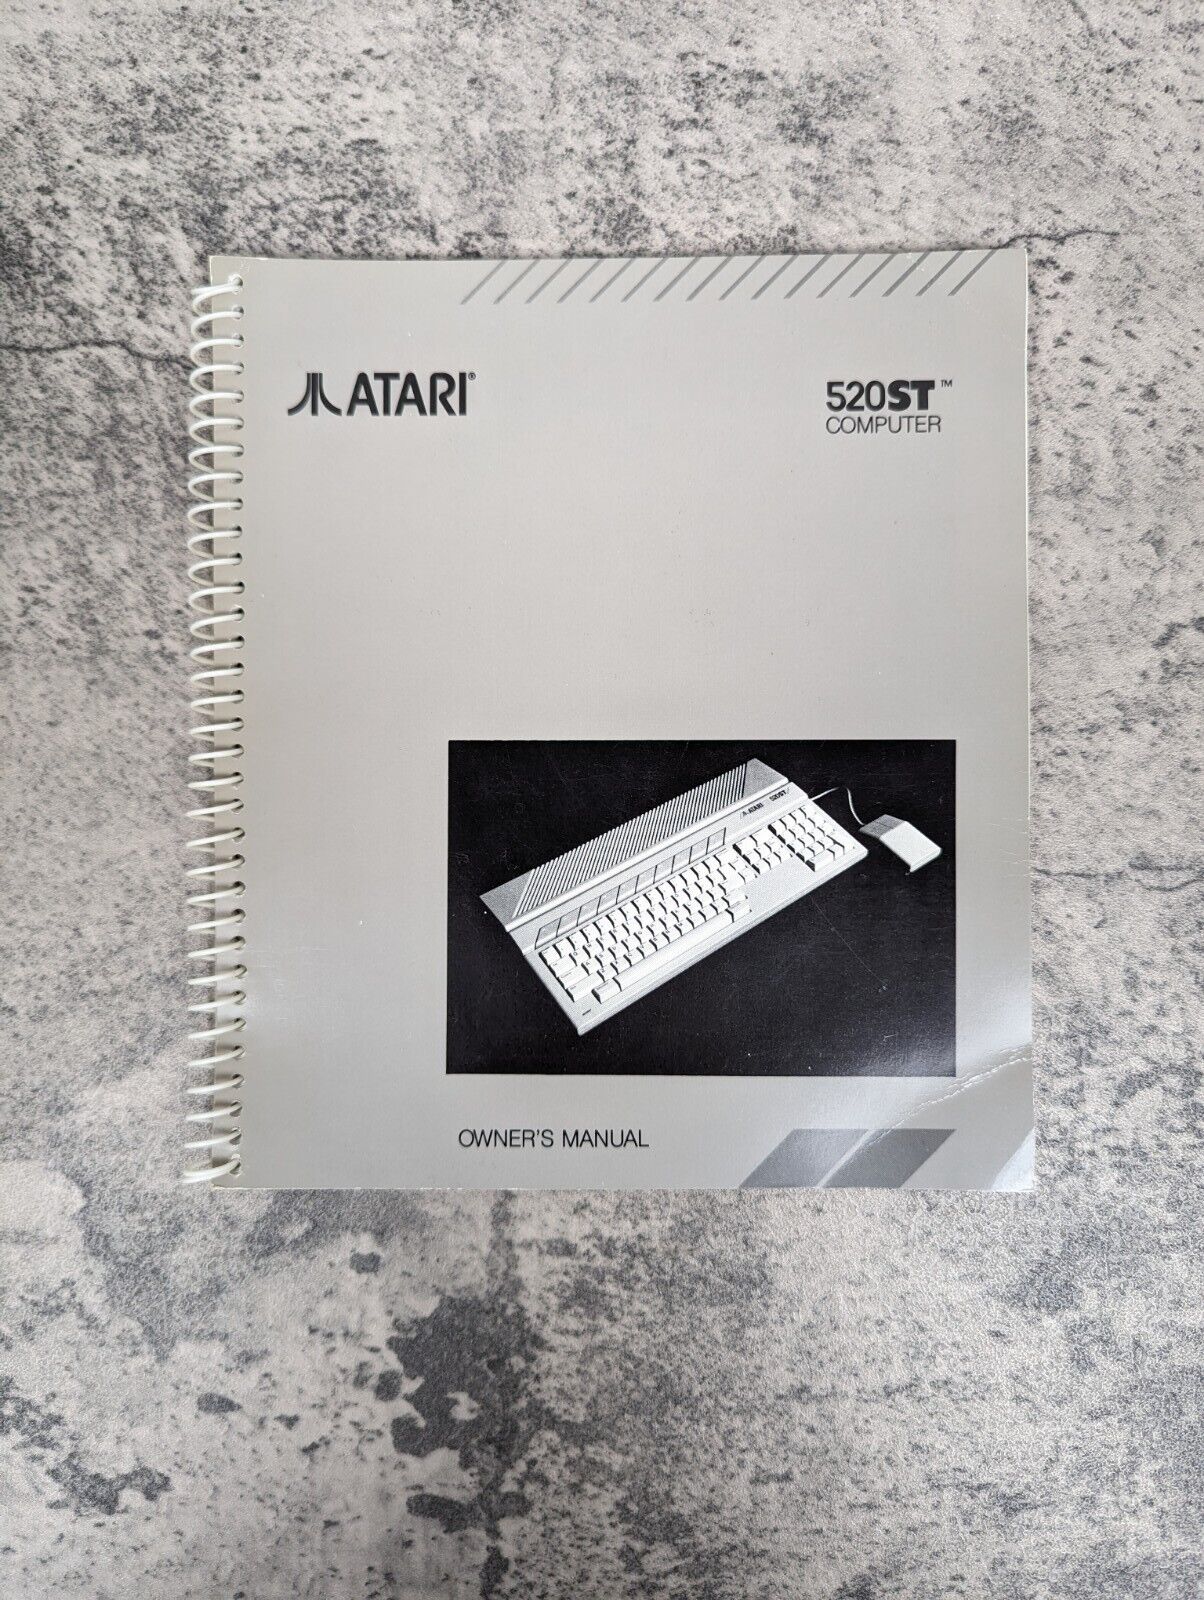 Original Vintage 1986 Atari 520ST Computer Owner's Manual Spiral Bound Book